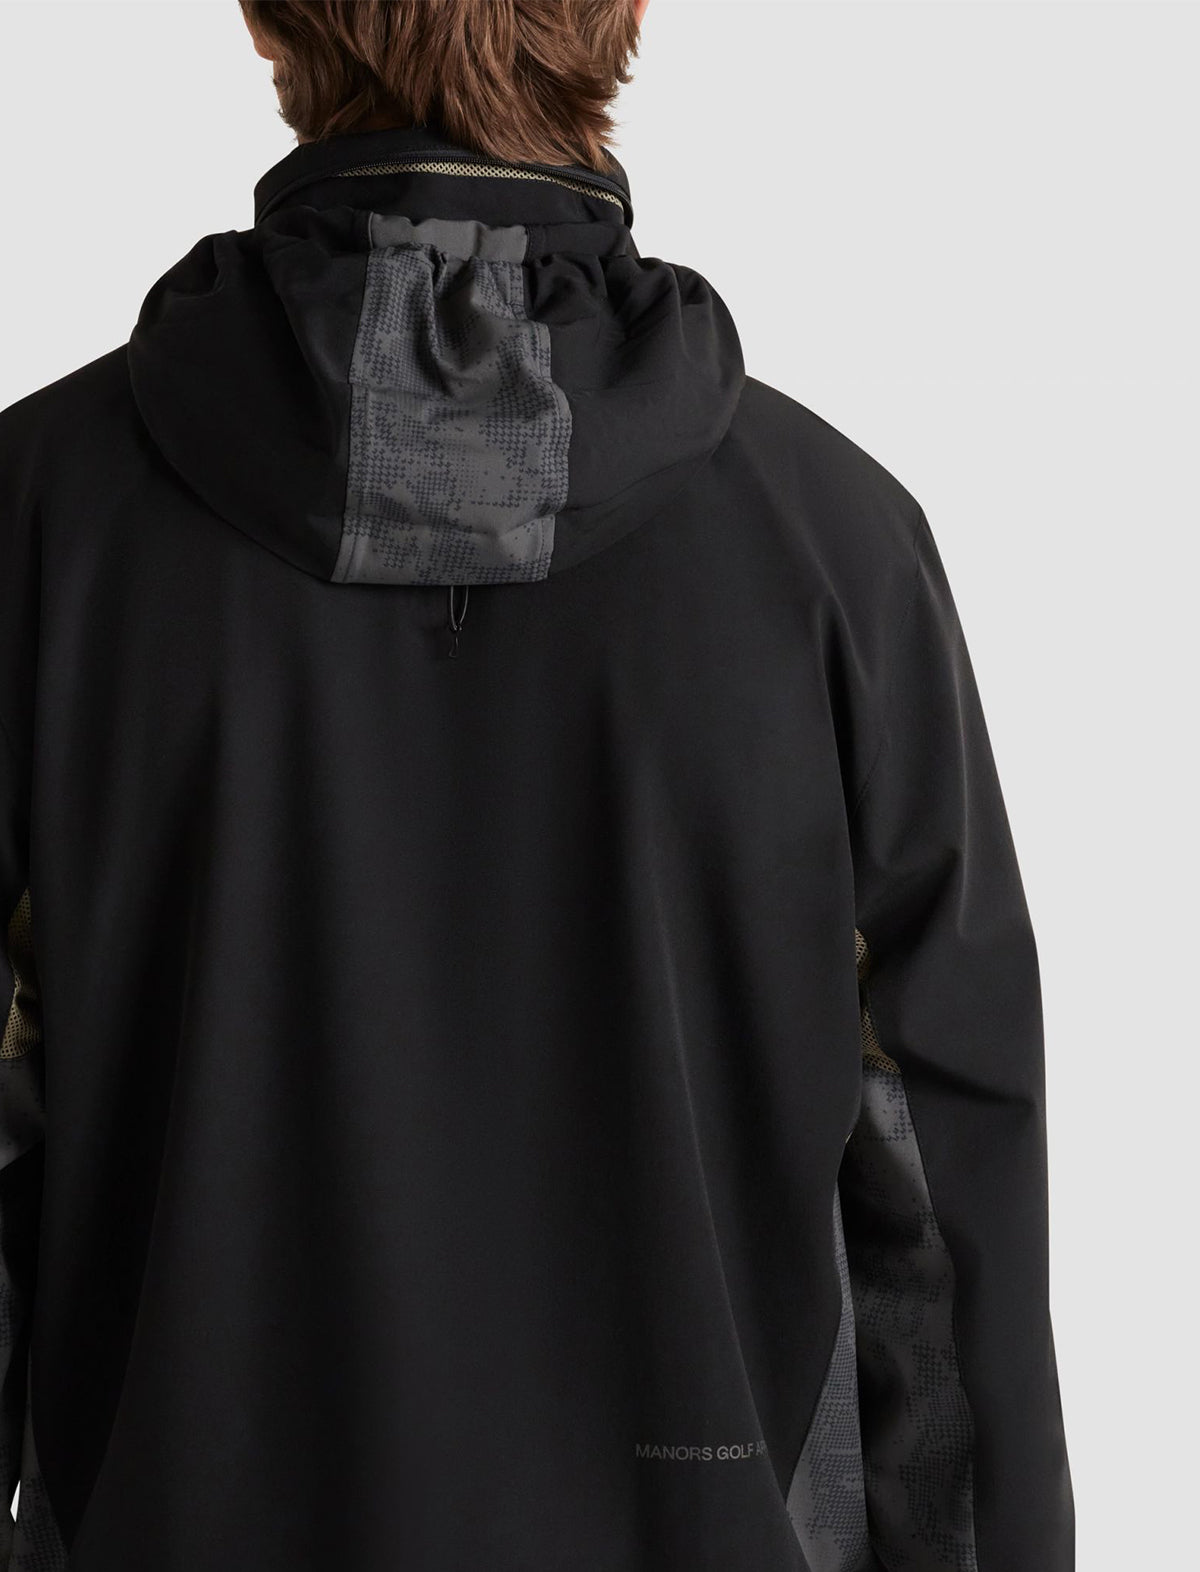 MANORS GOLF Ranger Tech Jacket in Black